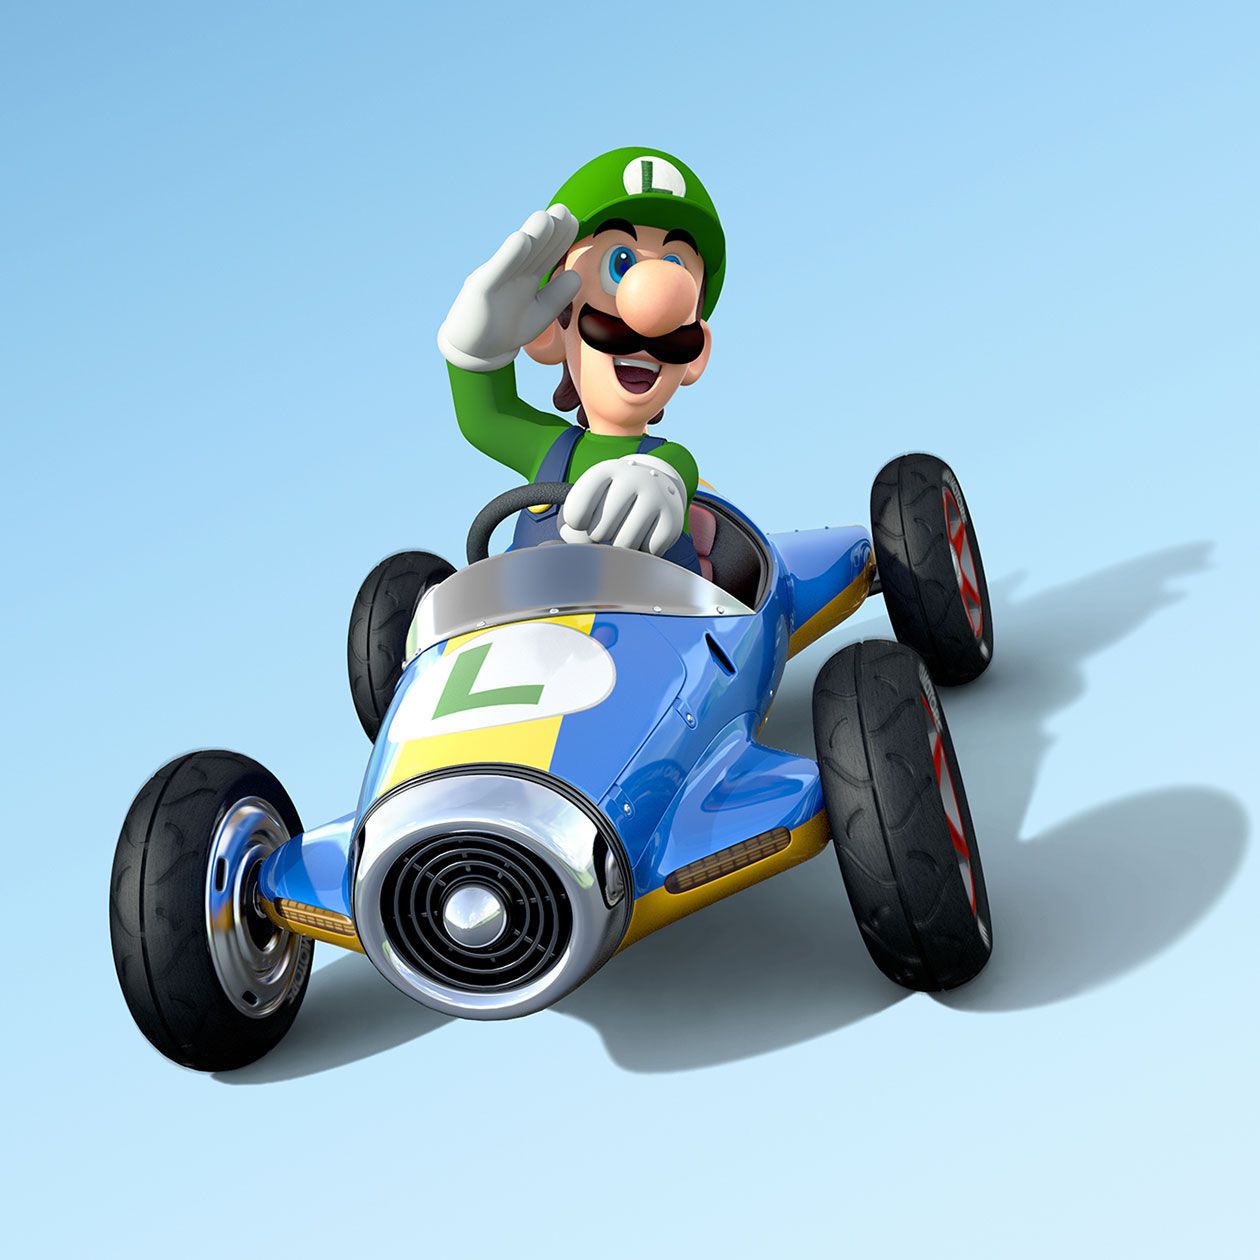 8 Mario Kart images 6